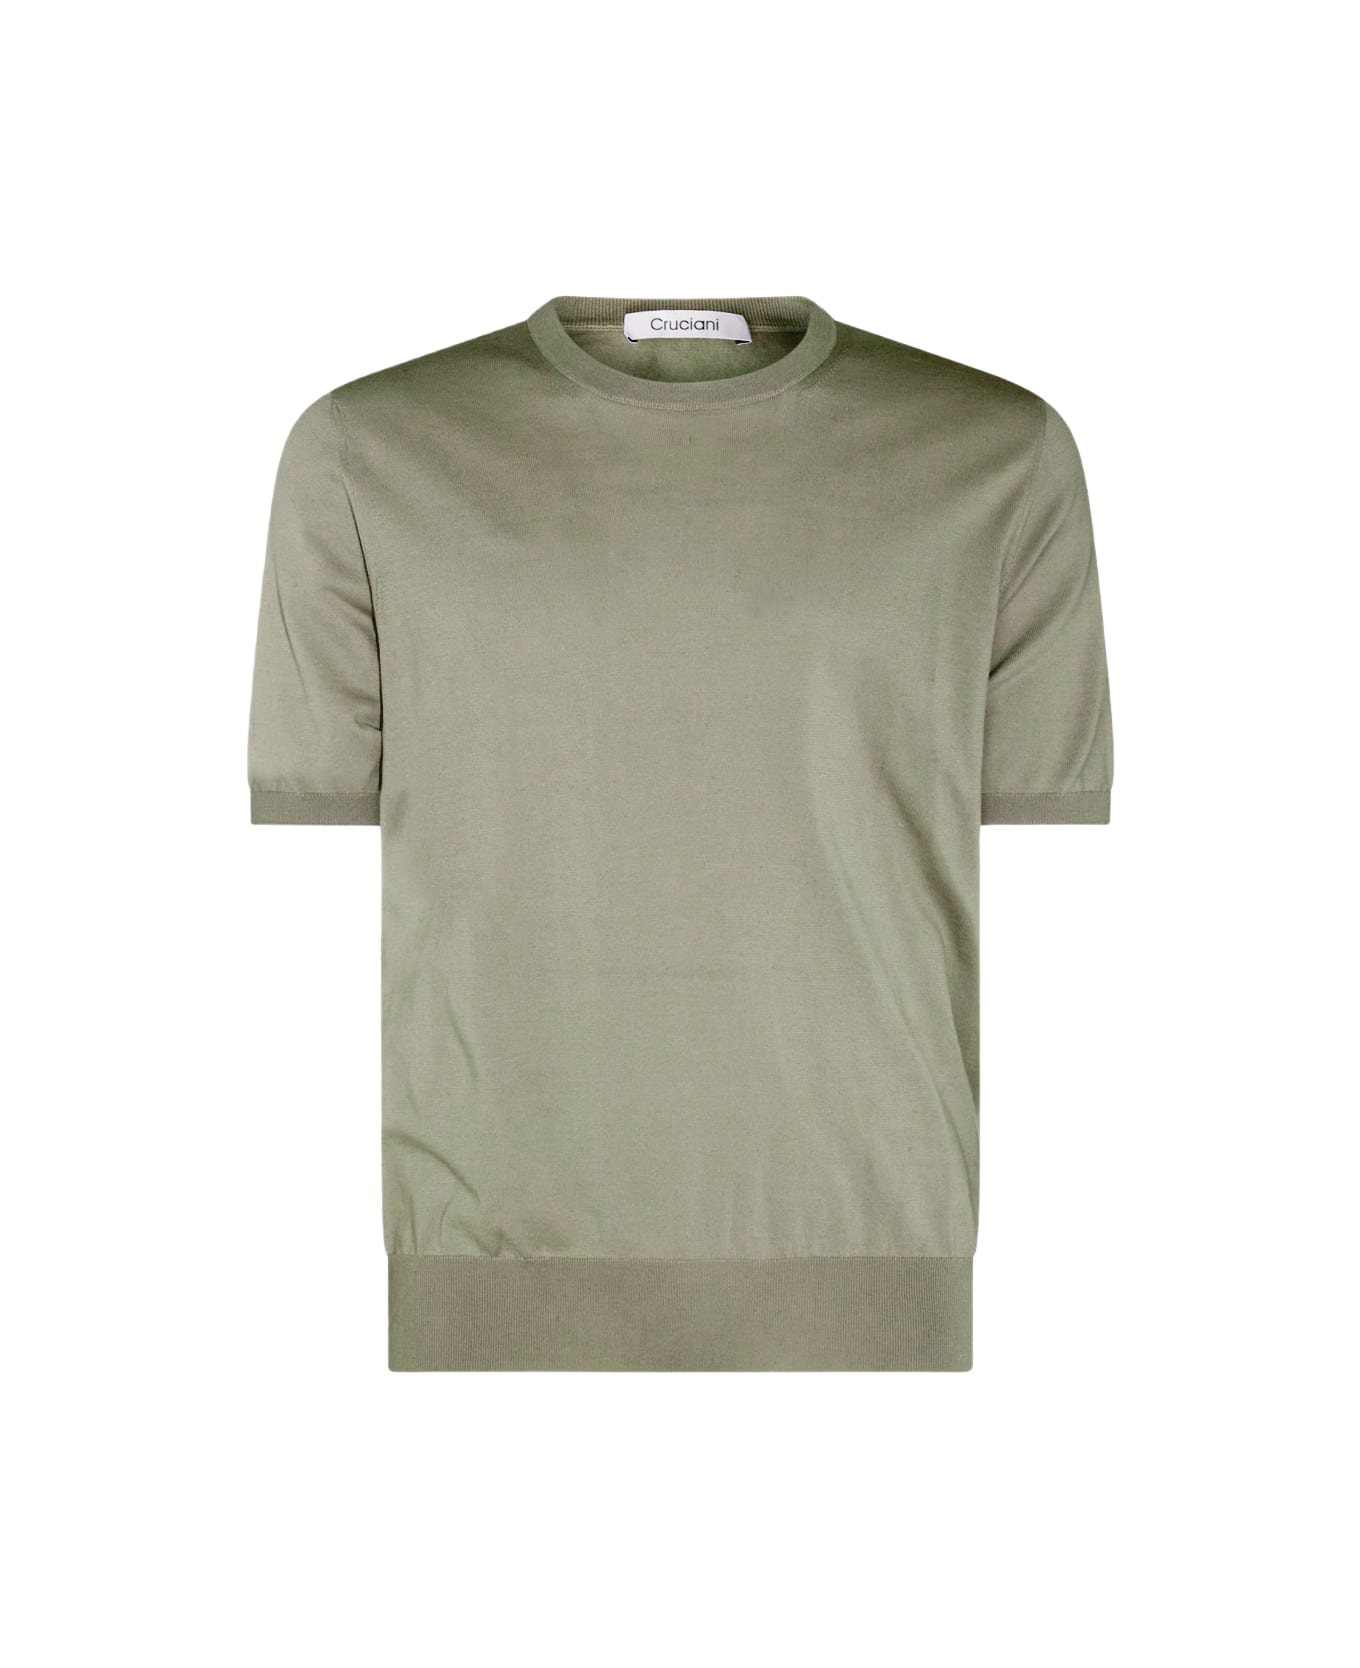 Cruciani Military Green Cotton T-shirt - Military シャツ